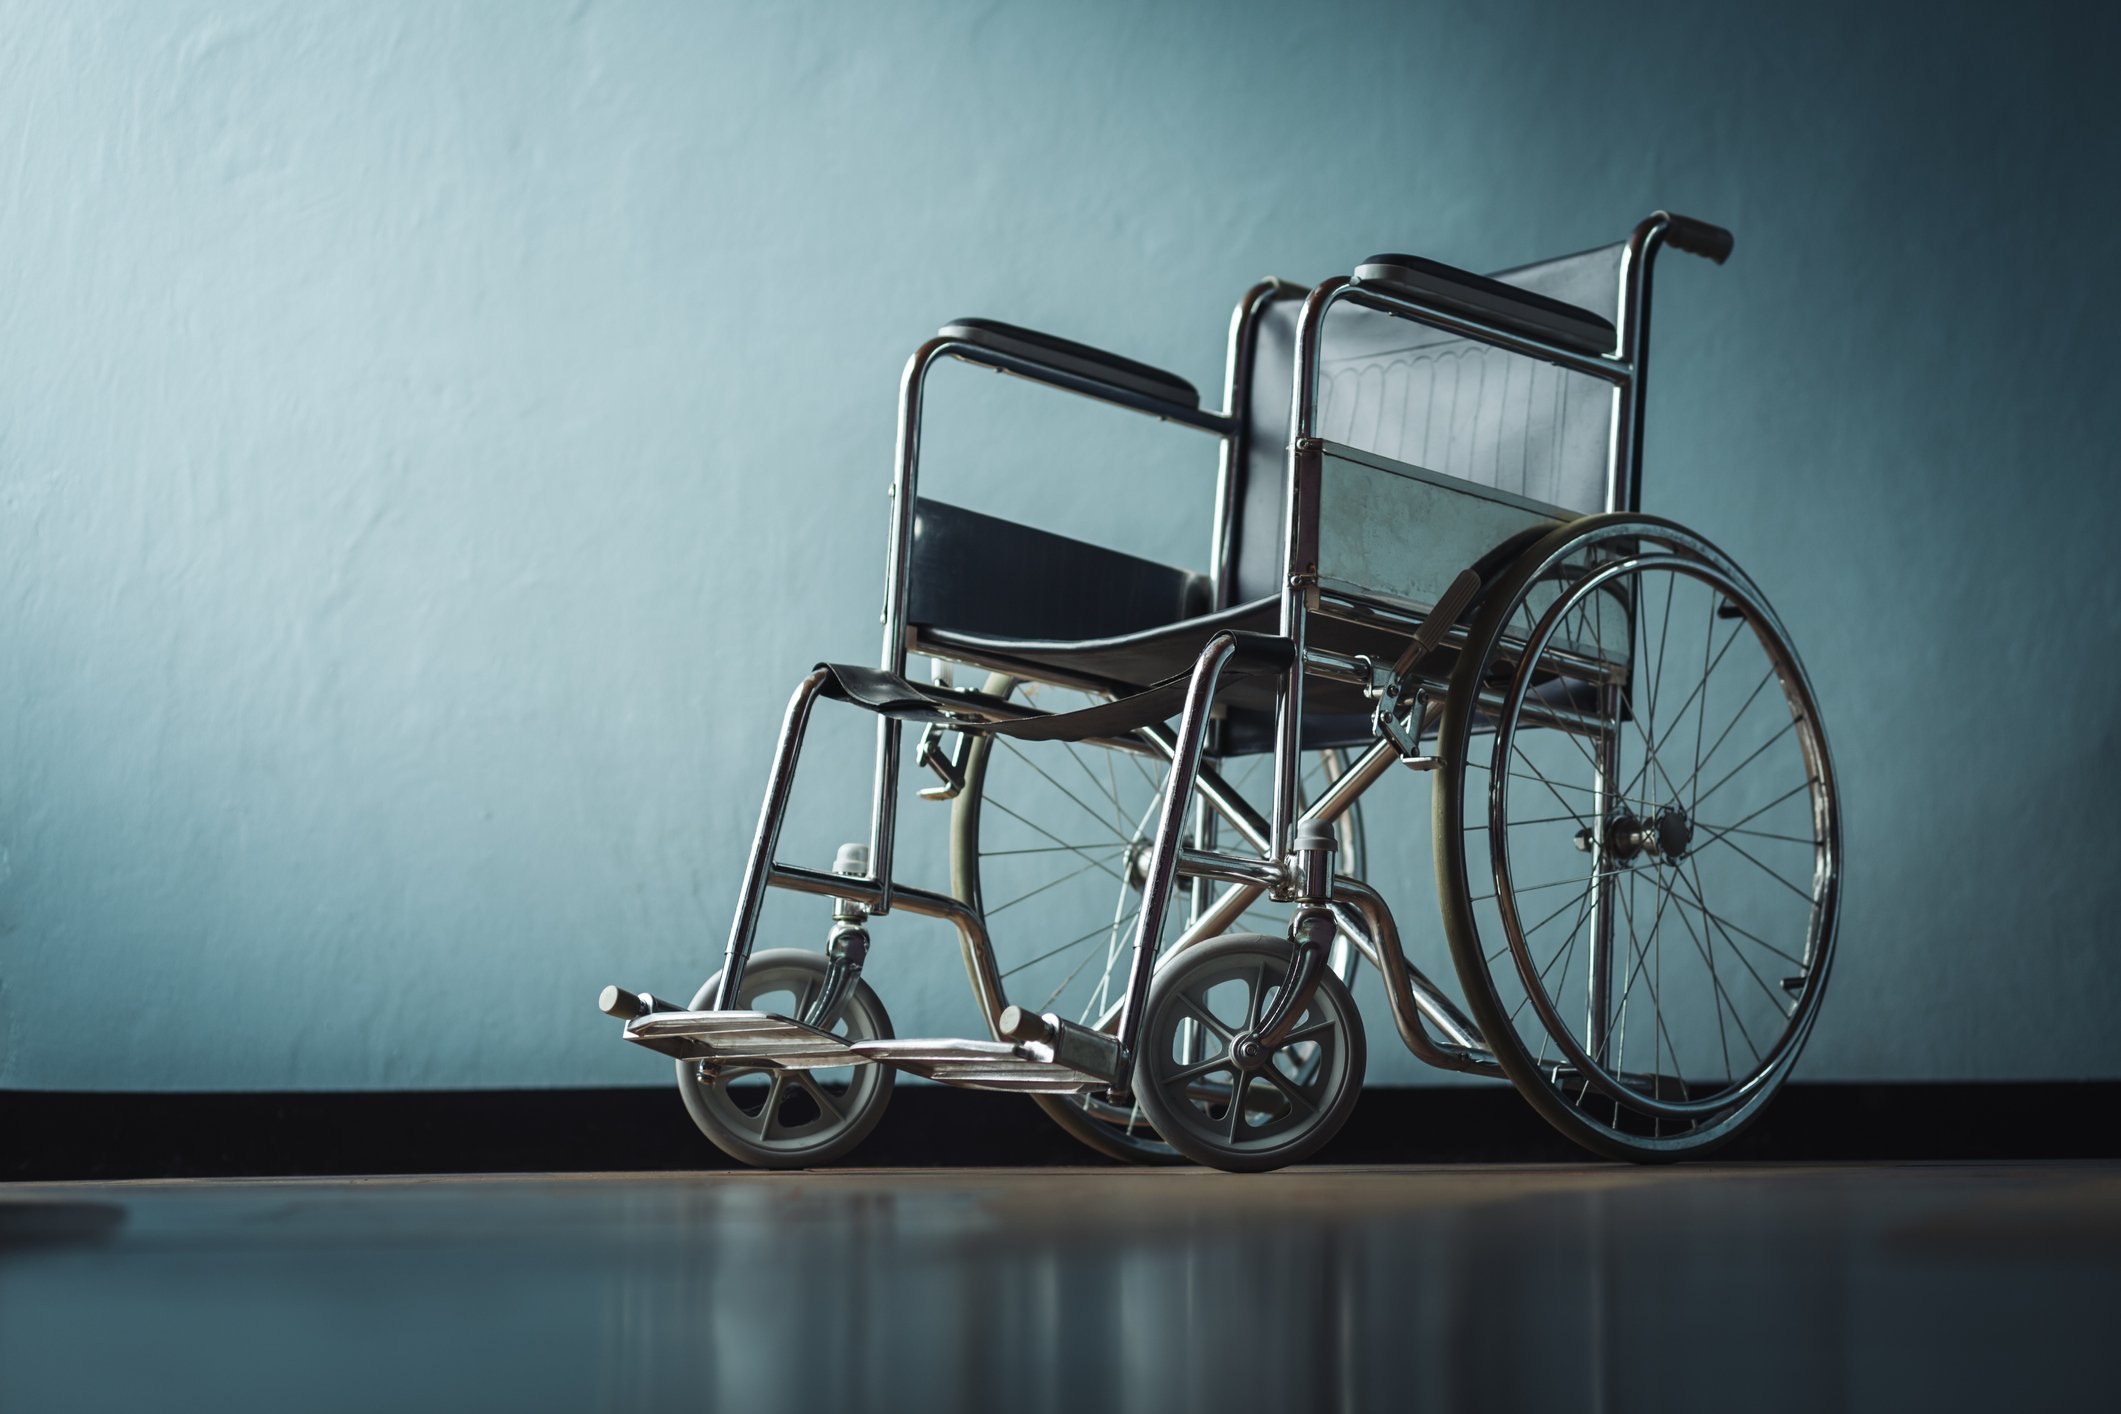 James war auf dem Weg, um seine kaputten Rollstuhl abzuholen. | Quelle: Getty Images